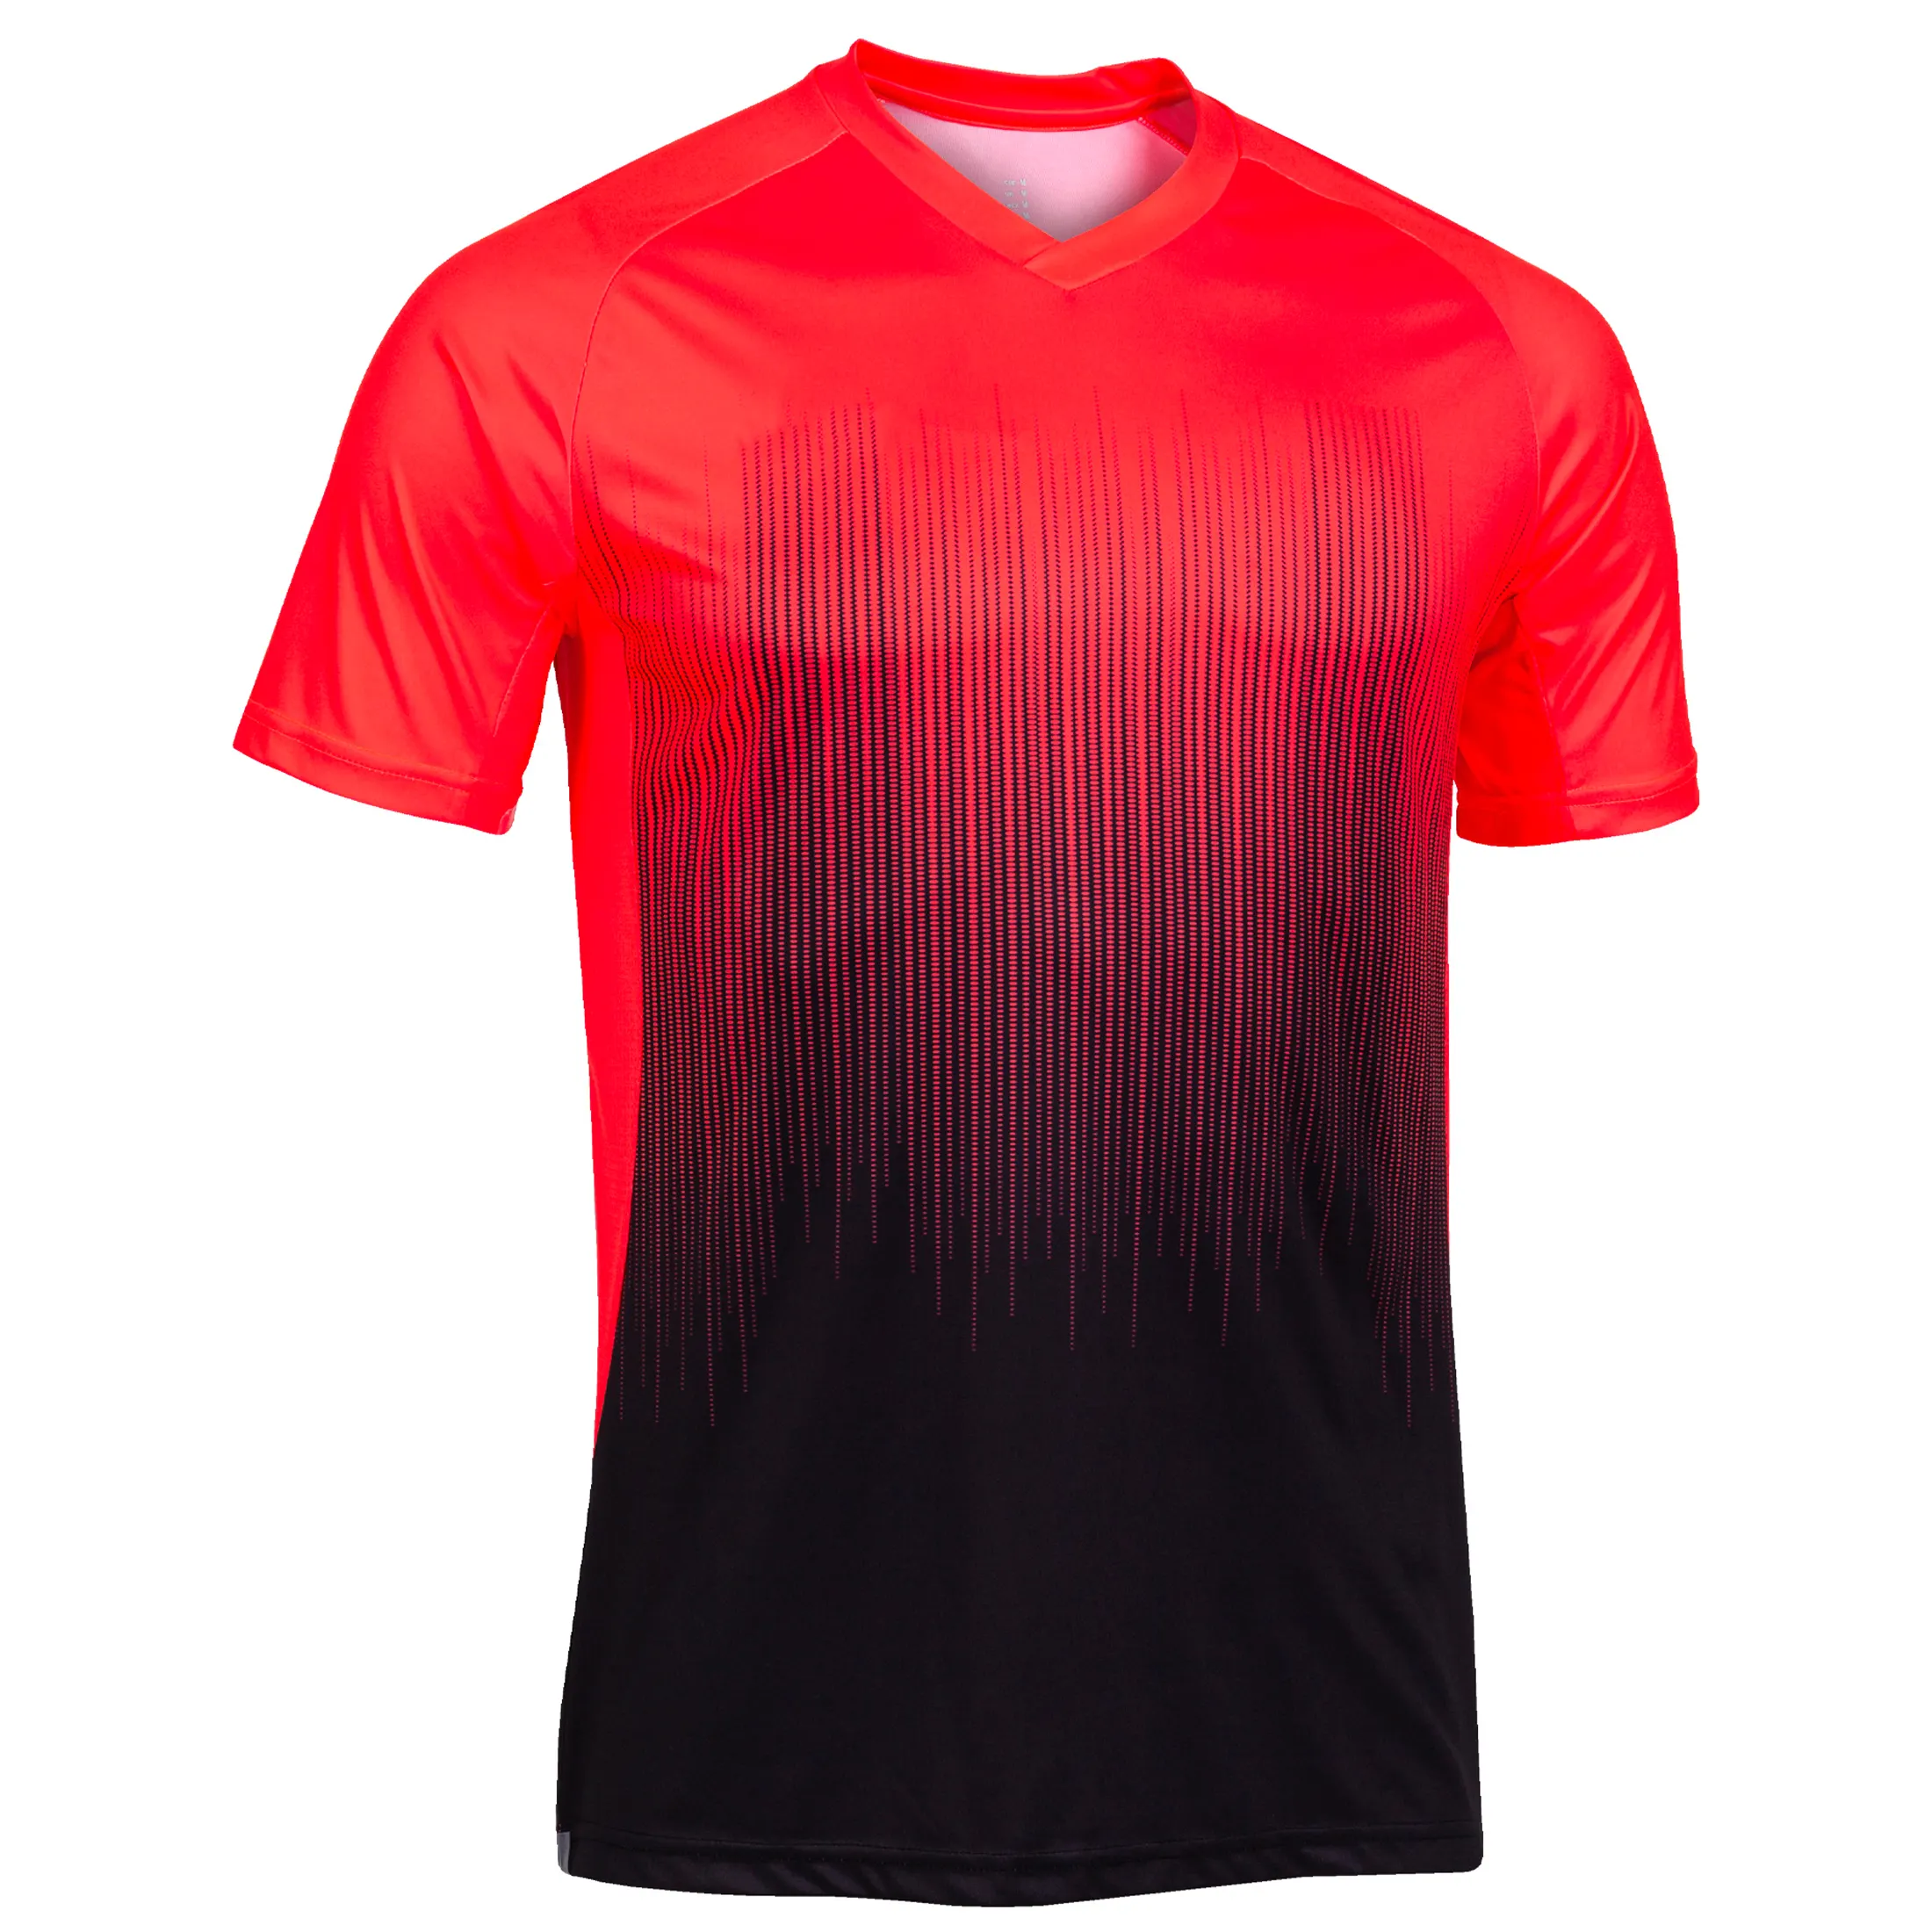 2022 Latest Sublimation T Shirt Men Clothes New Summer Style Fashion Color Sublimated T Shirt For Men